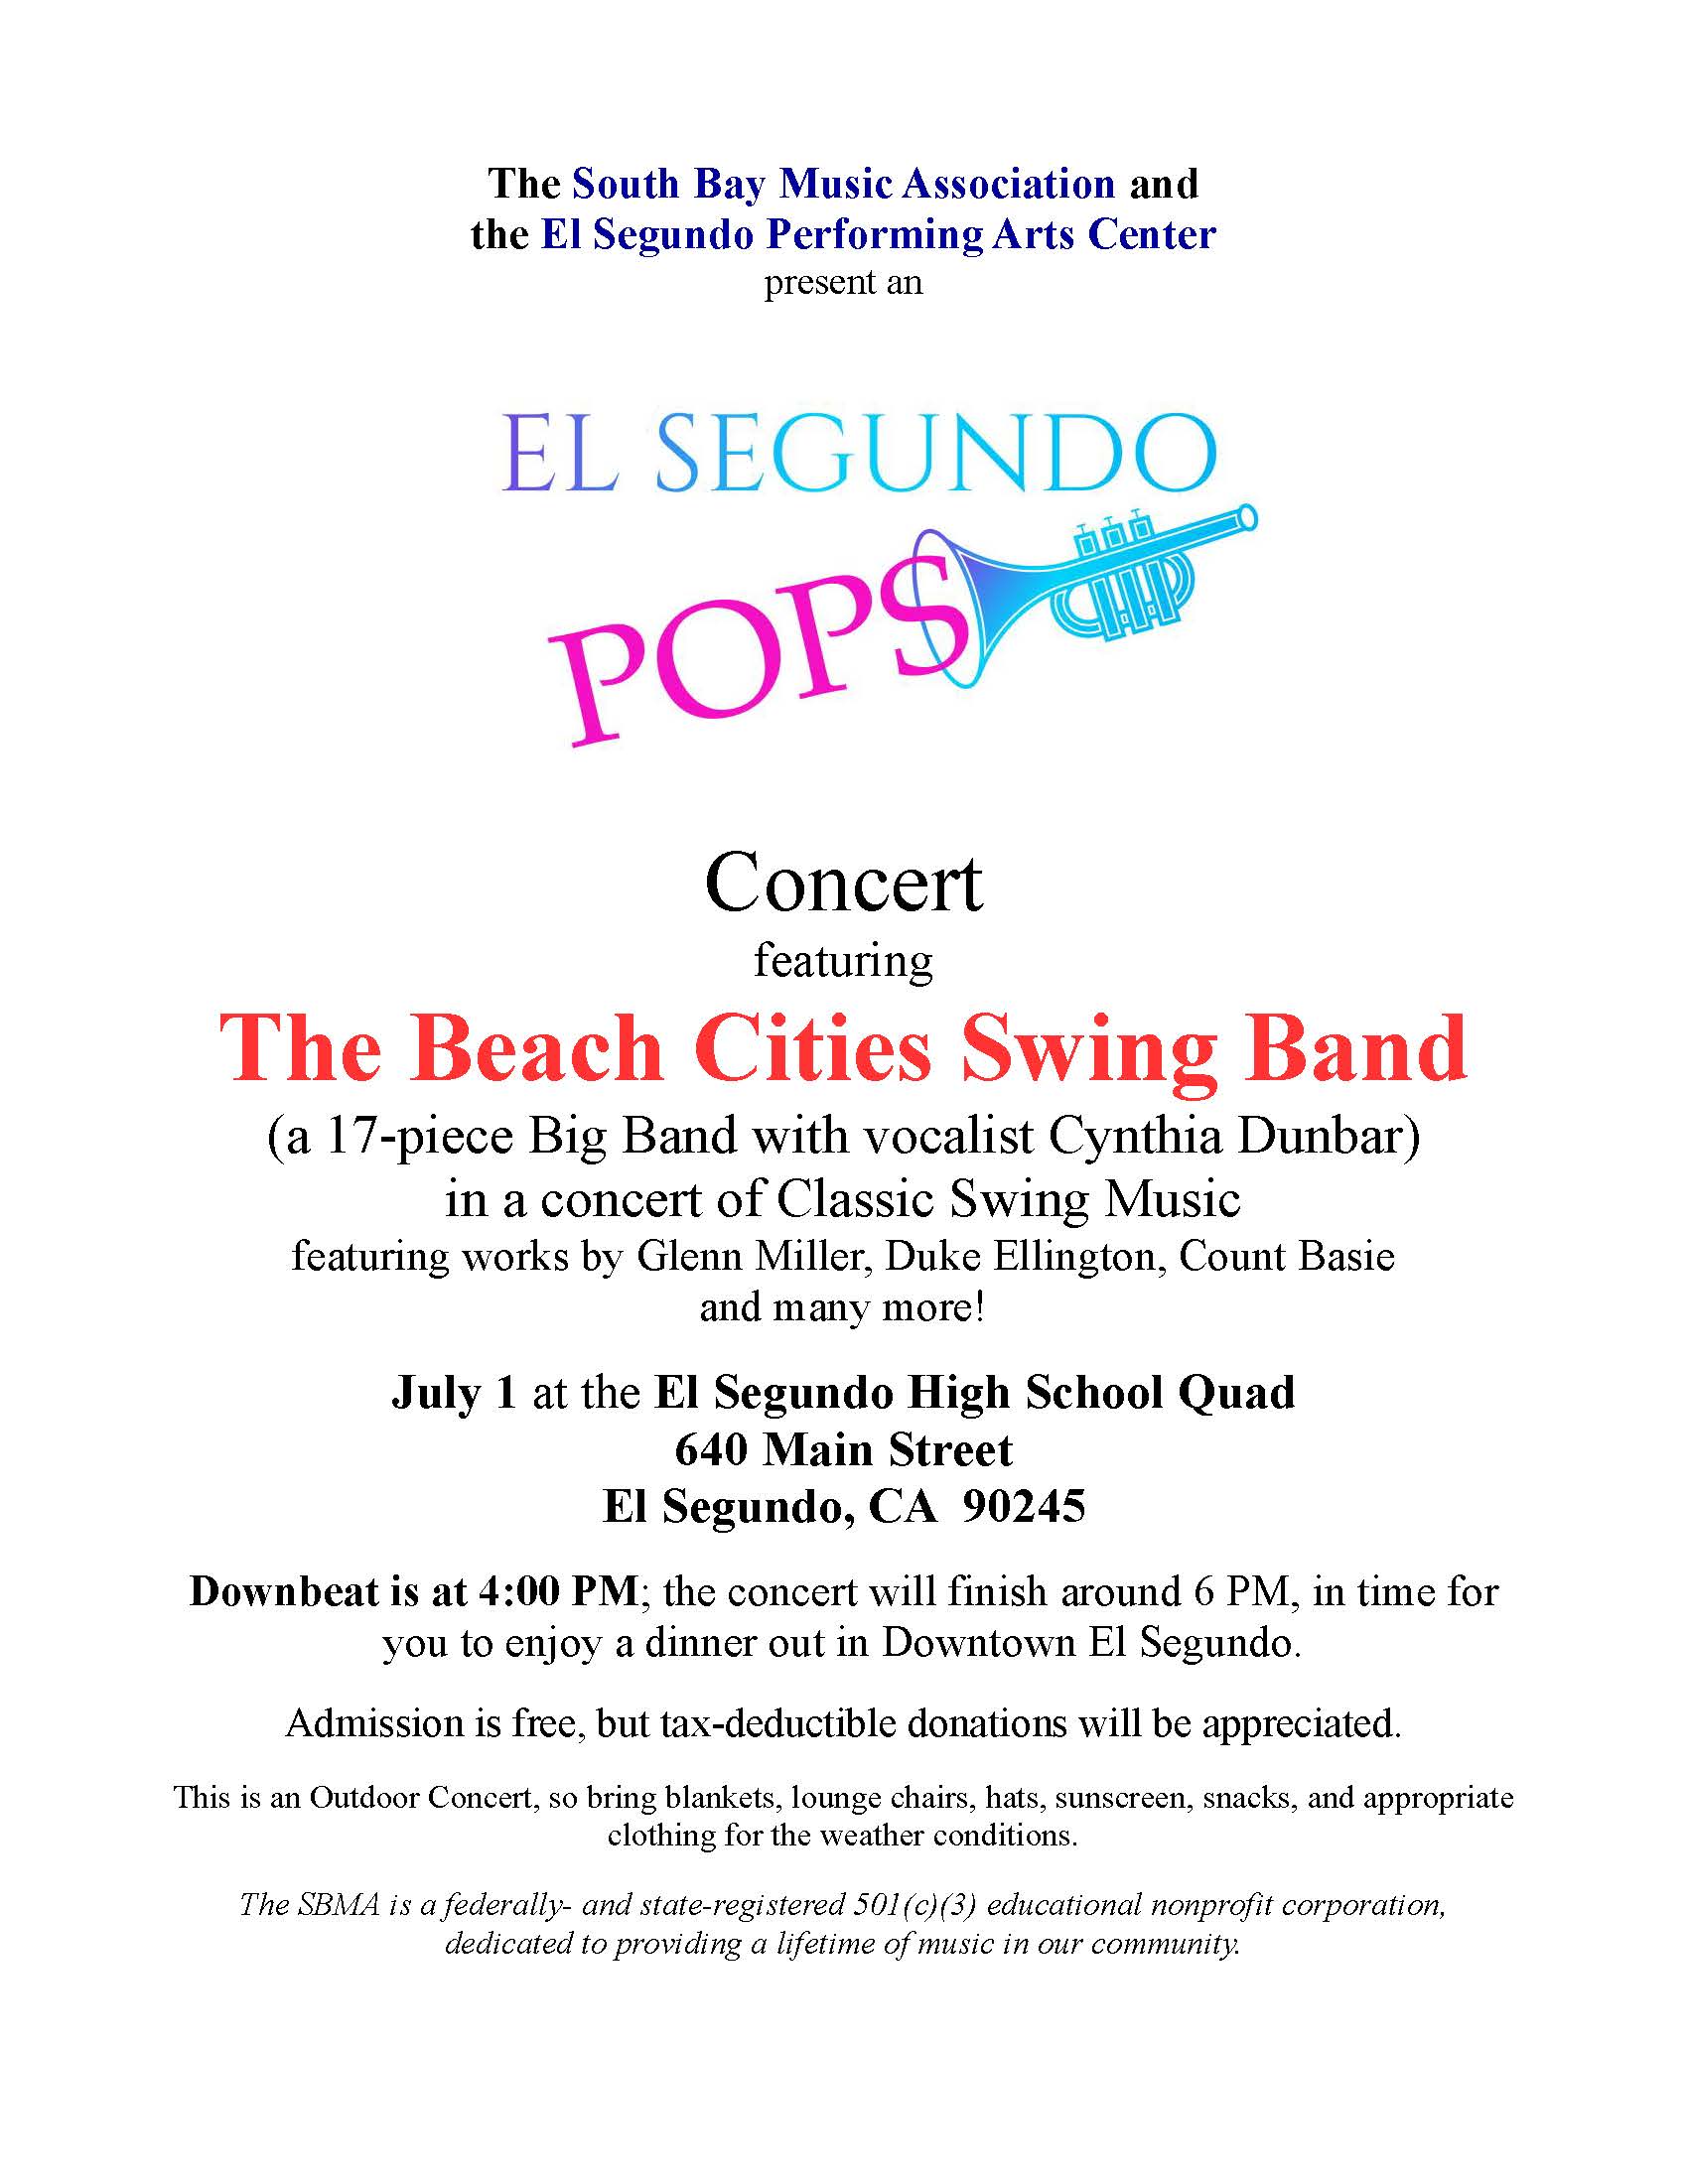 The Beach Cities Swing Band